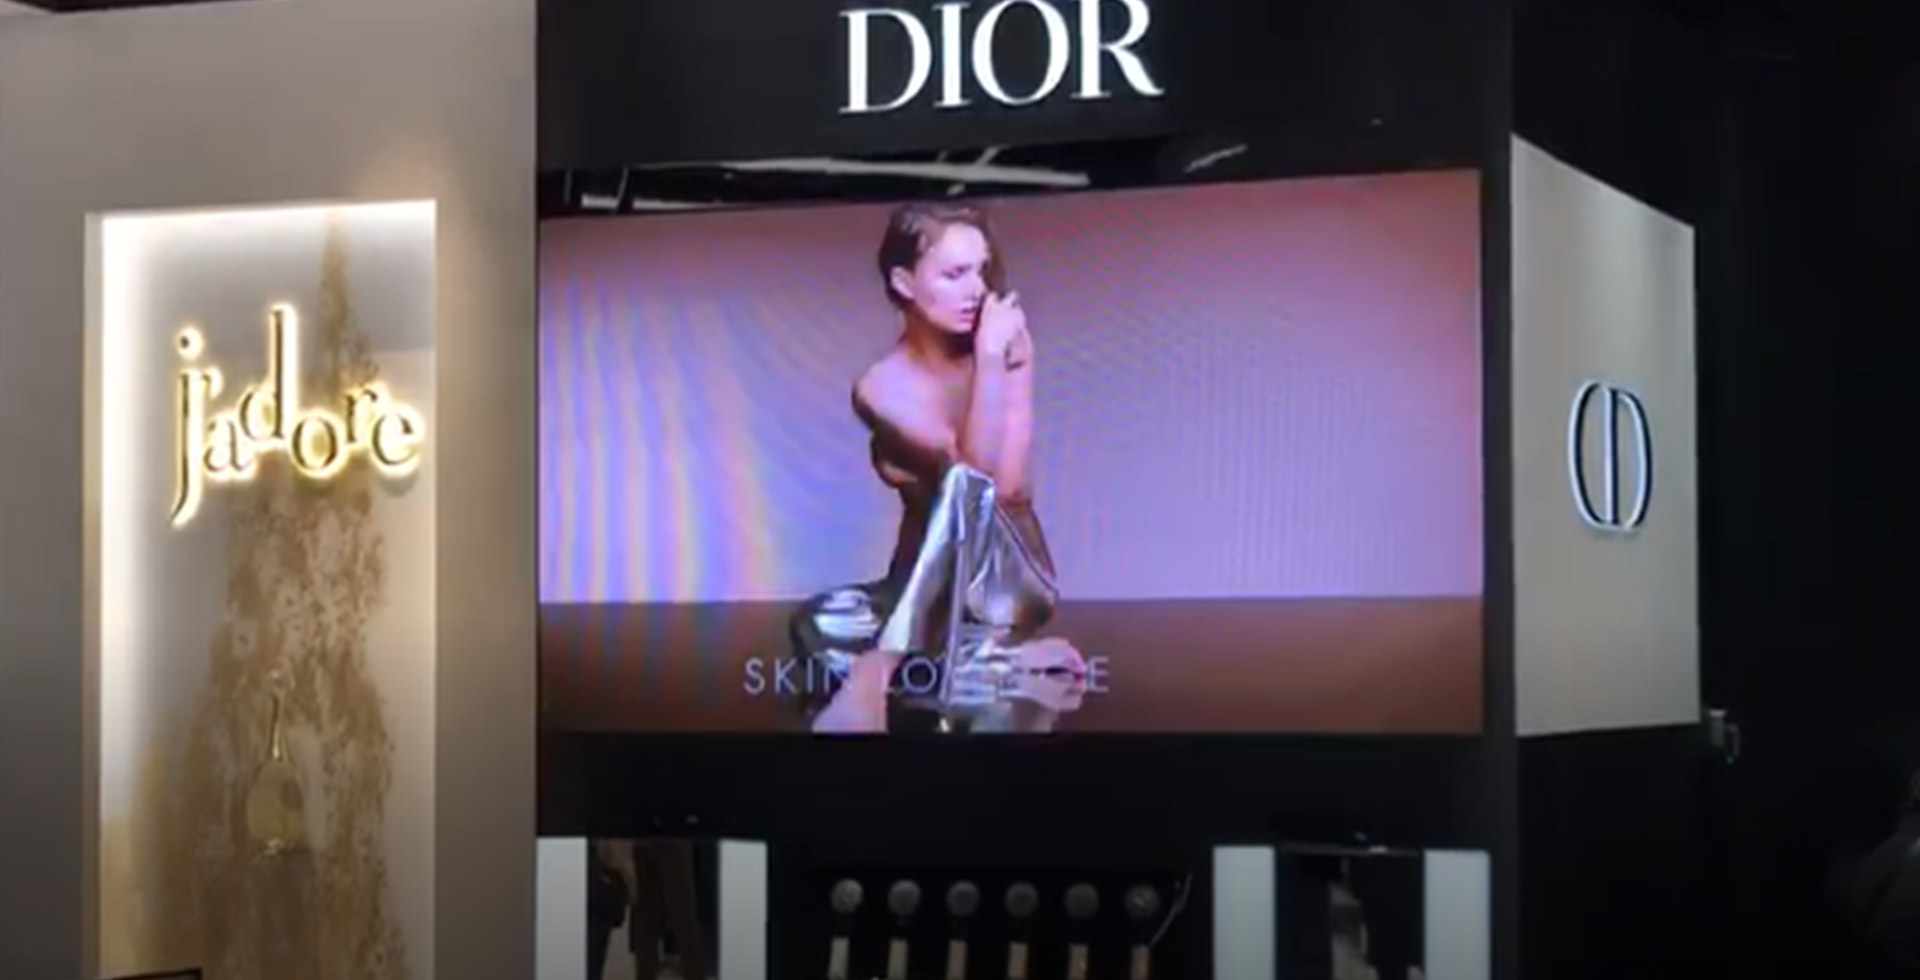 Dior Store